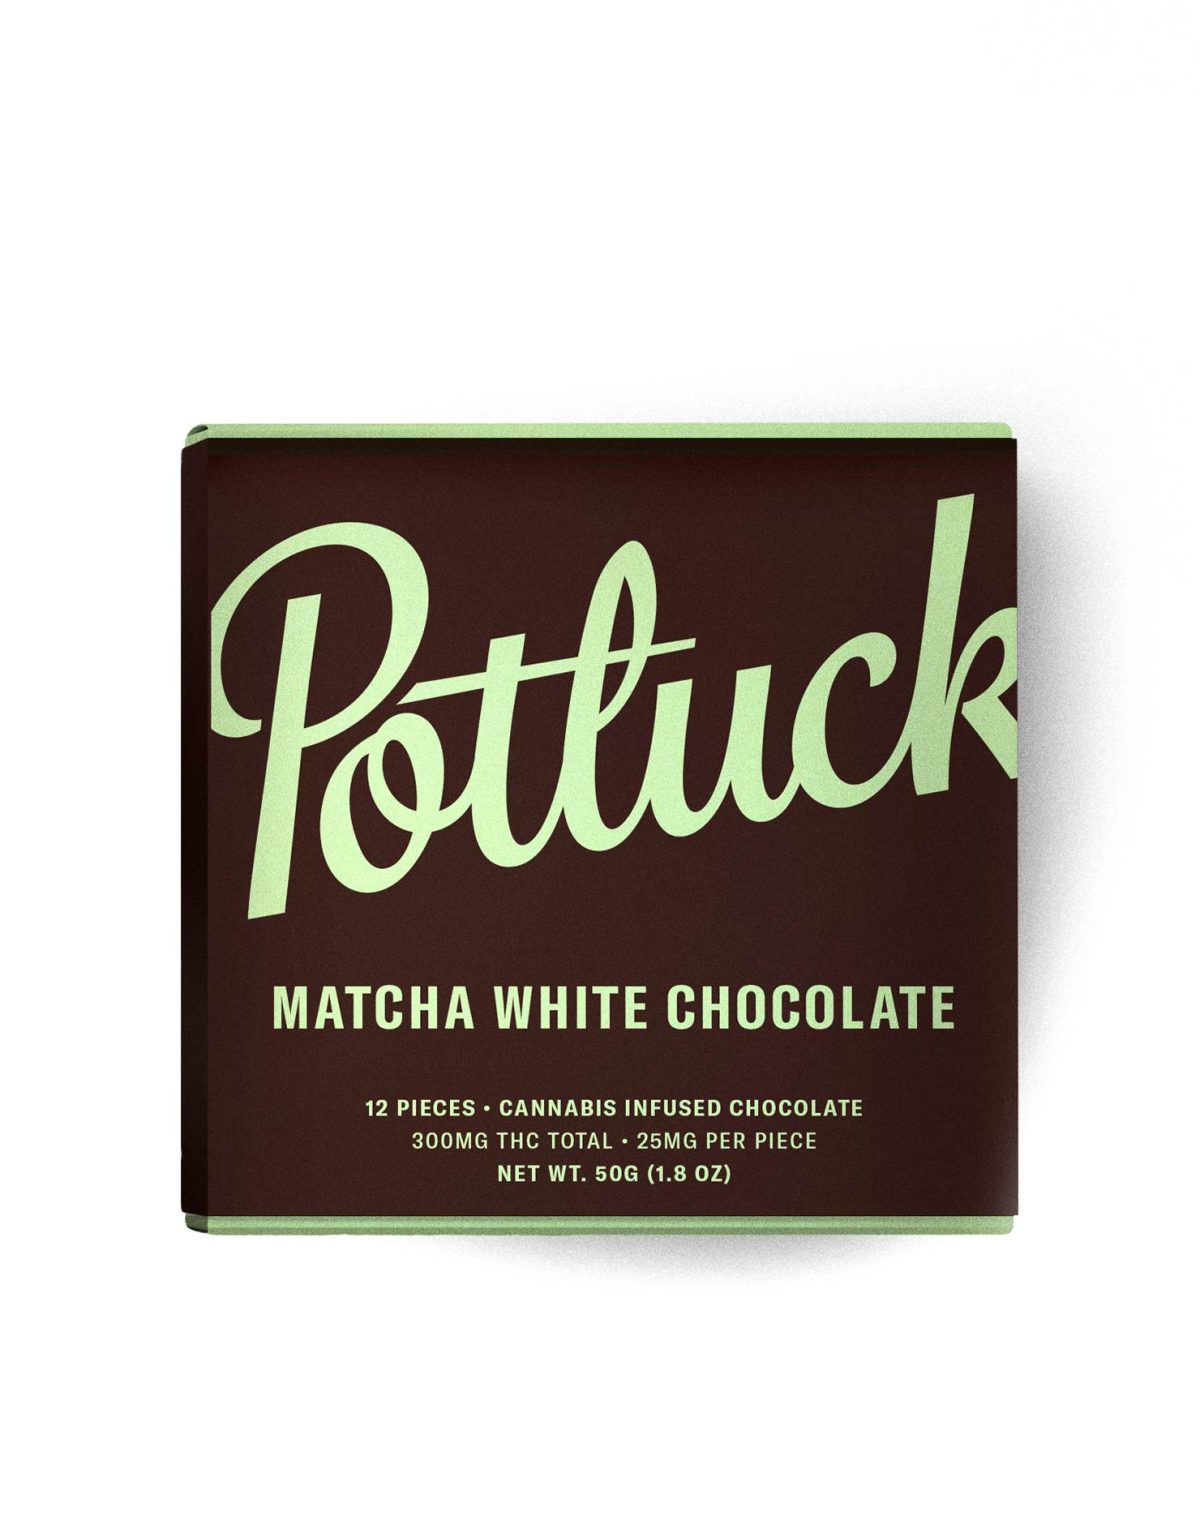 Matcha White Chocolate by Potluck